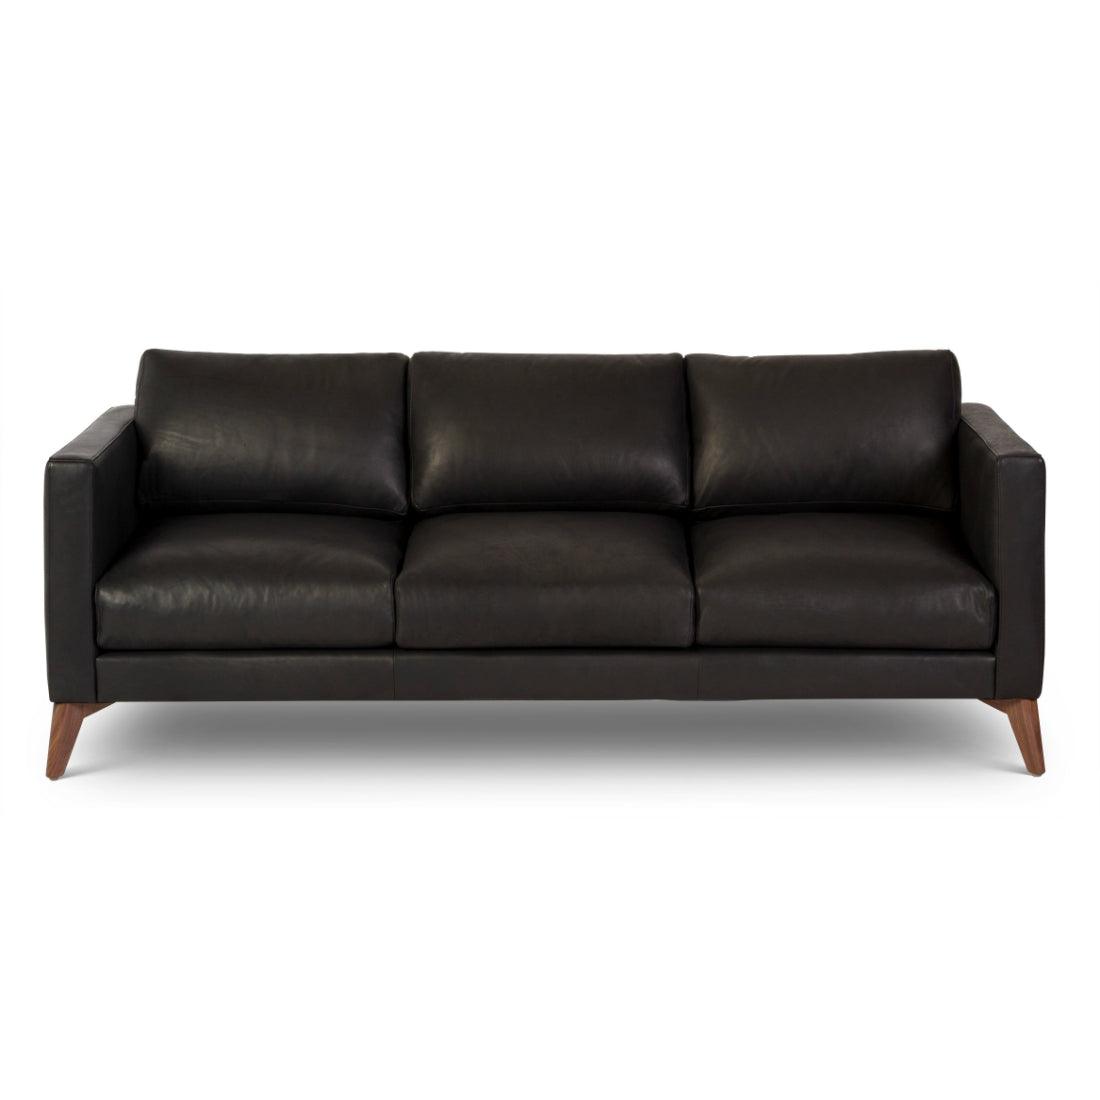 Burbank Leather Sofa Environmentally Friendly and Made to Order - Uptown Sebastian